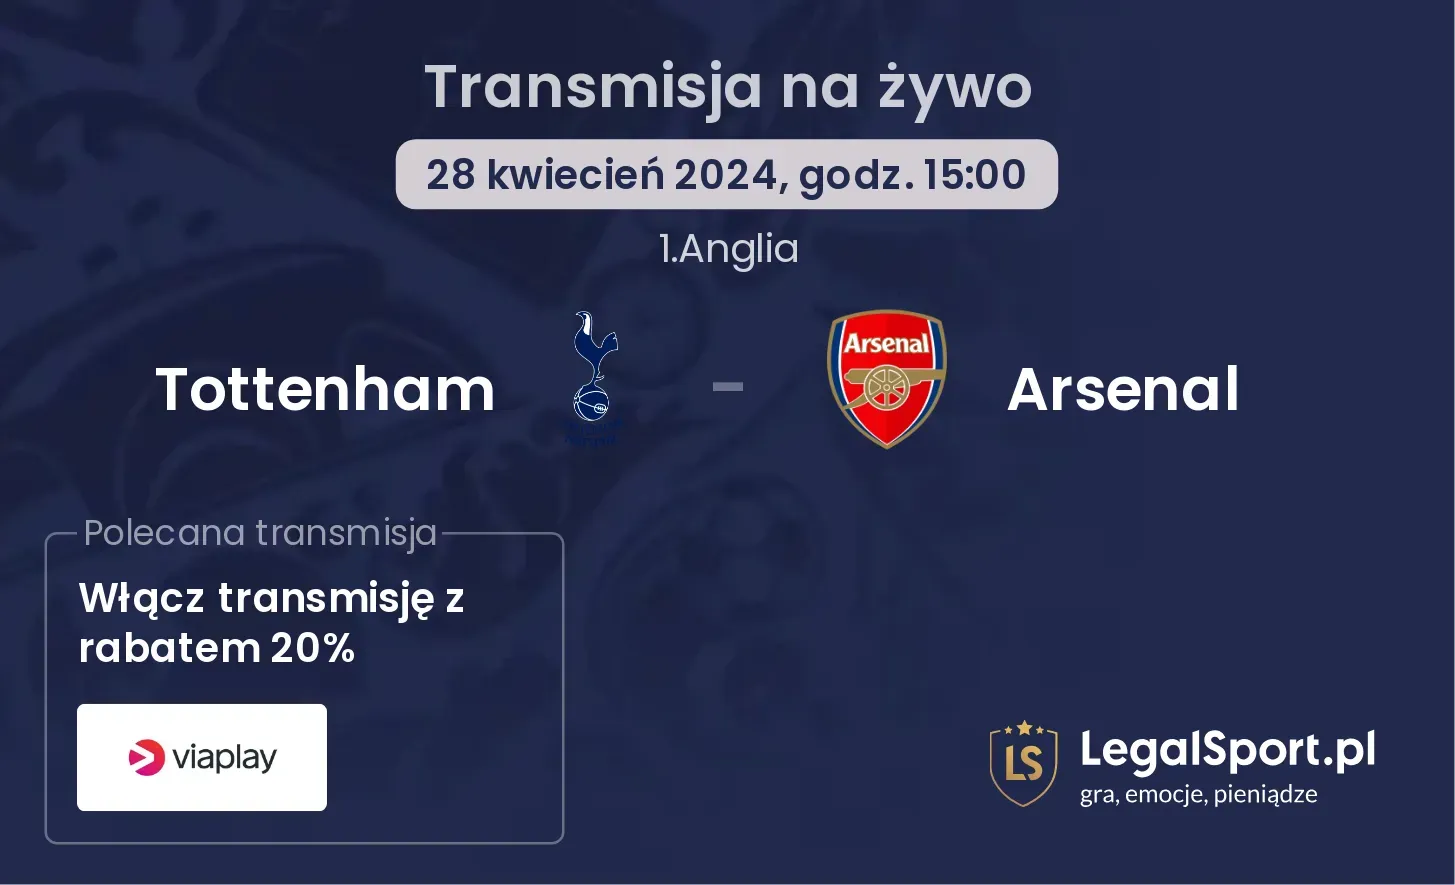 Tottenham - Arsenal transmisja na żywo